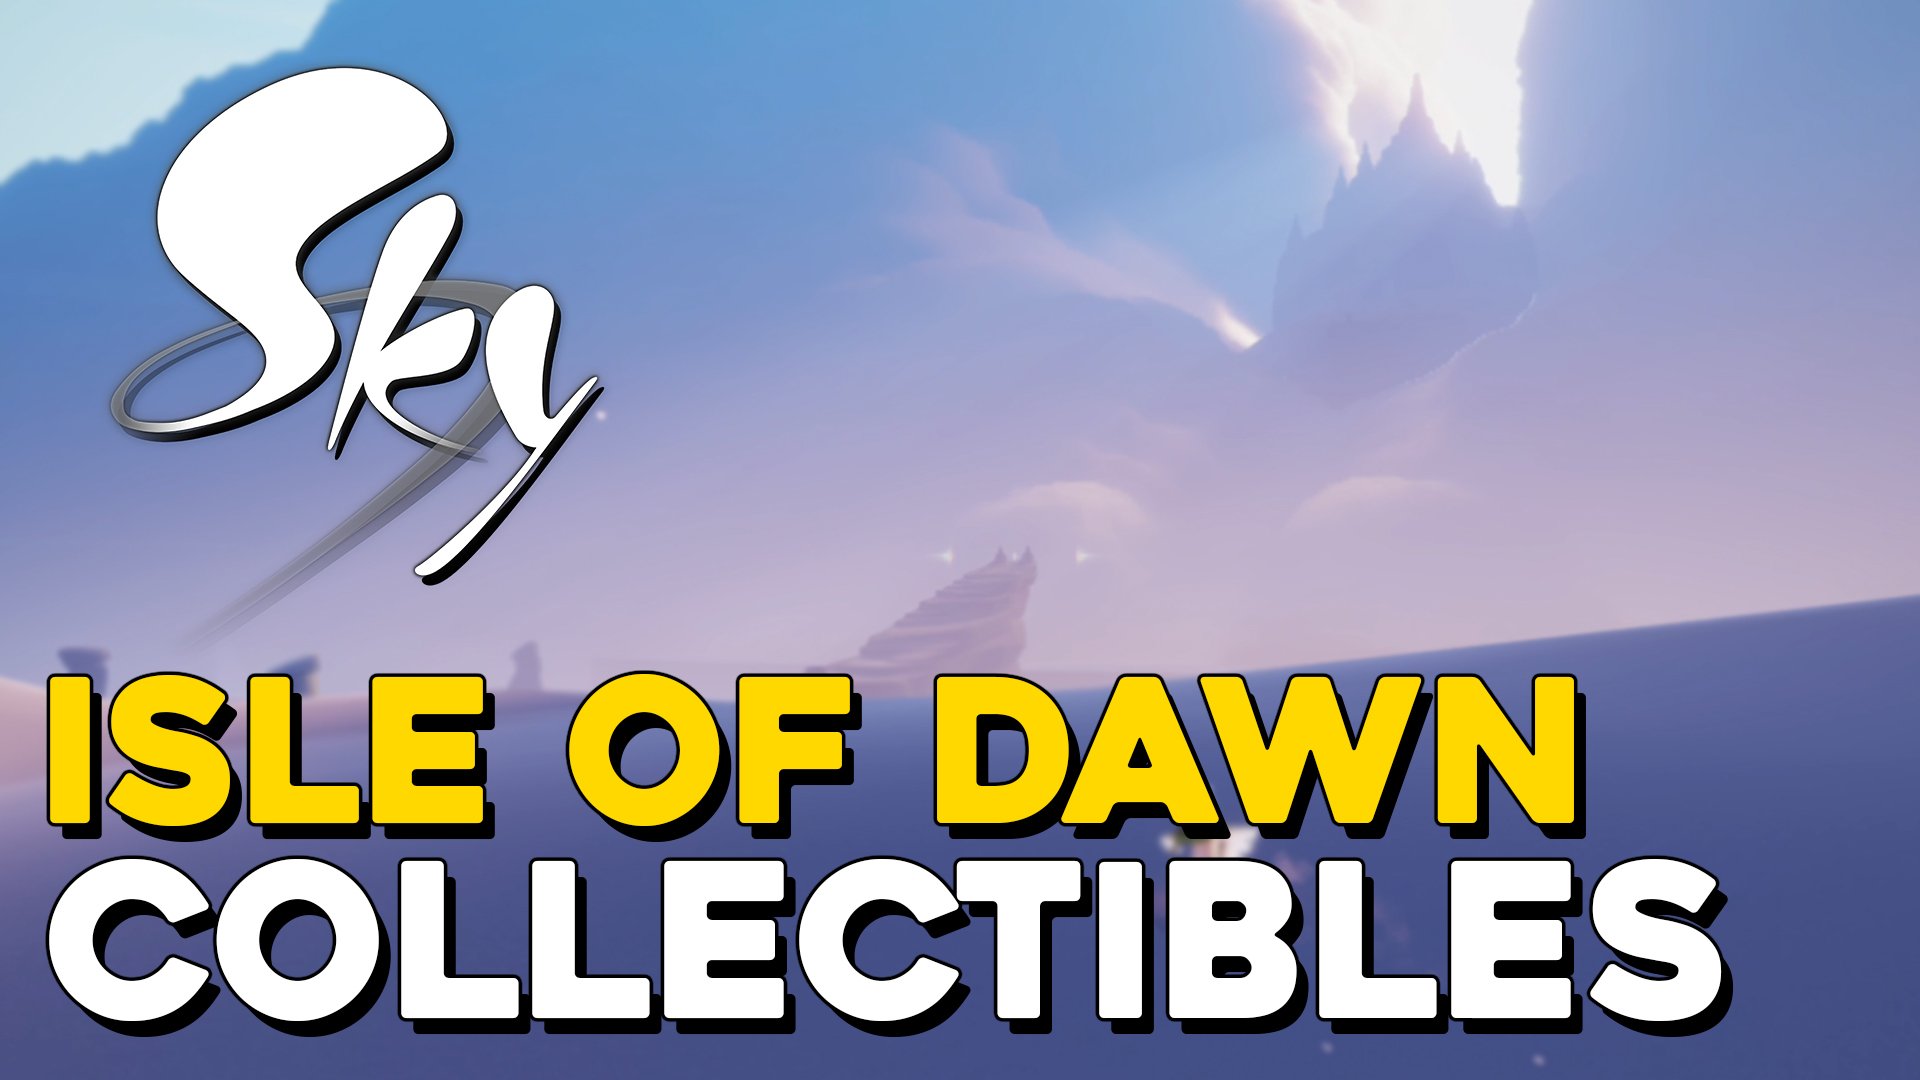 Sky Isle Of Dawn Collectibles.jpg